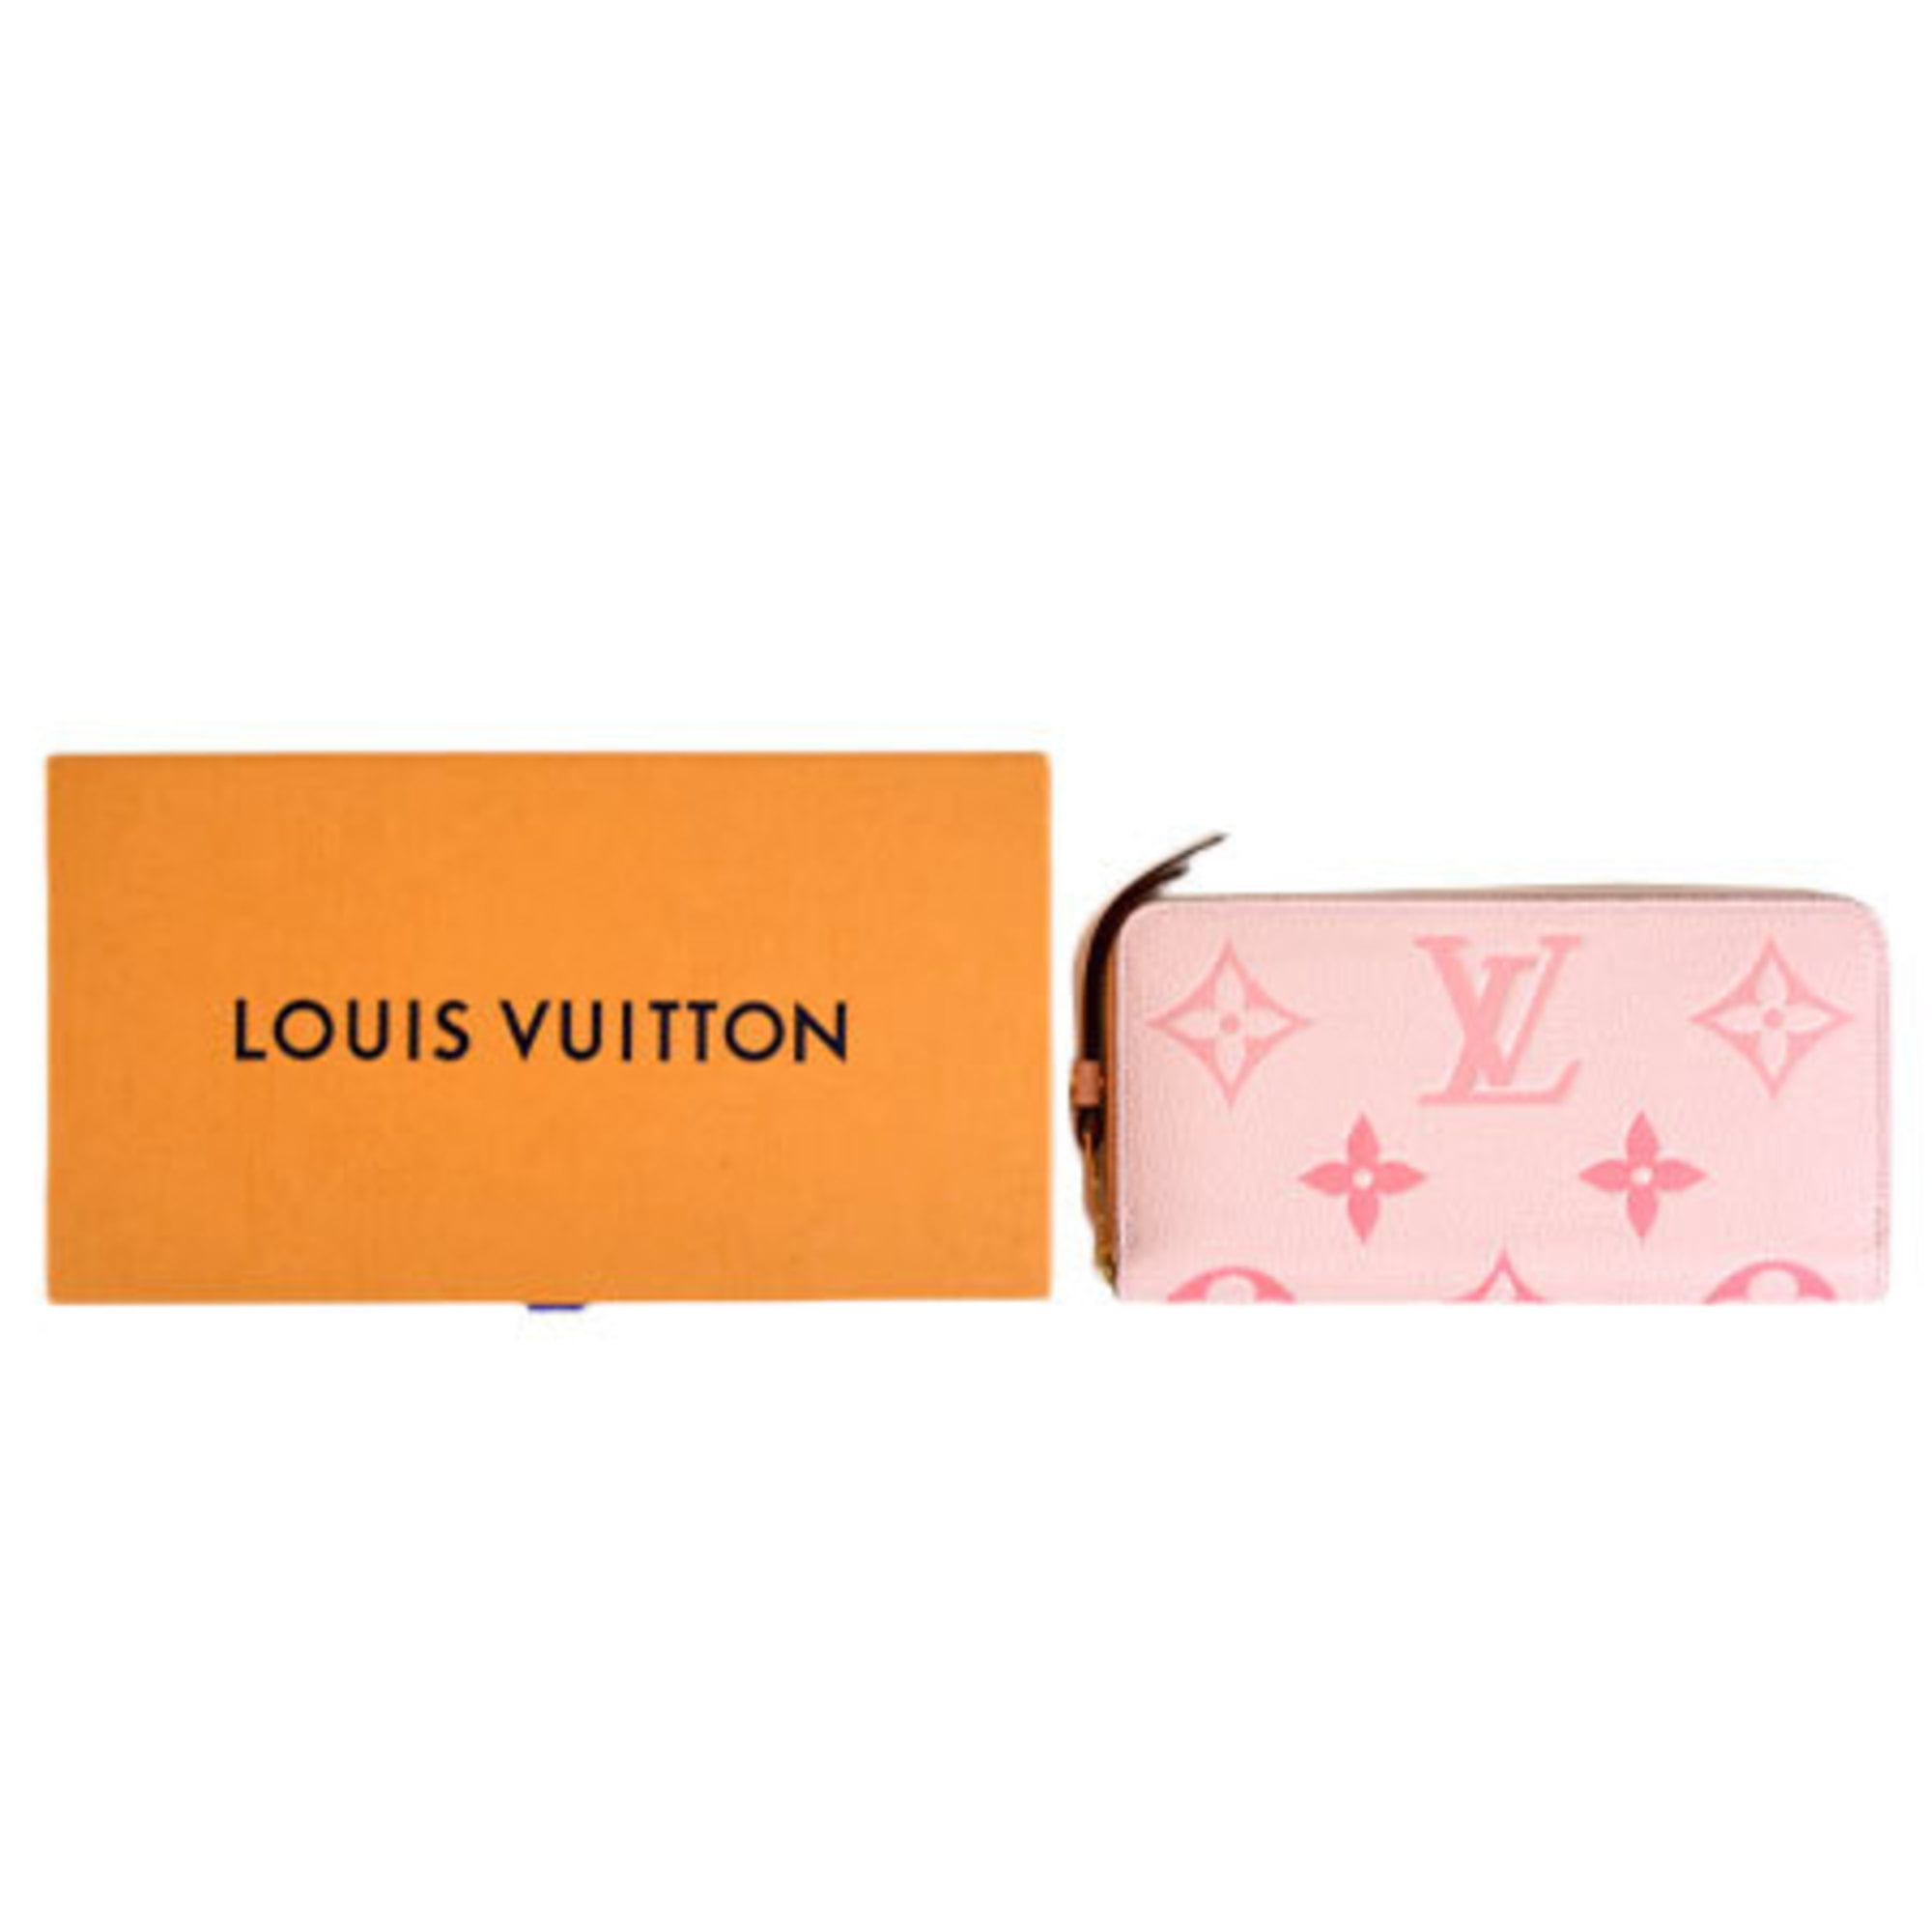 LOUIS VUITTON M80403 Monogram Empreinte By the-Pool Zippy Wallet Pink